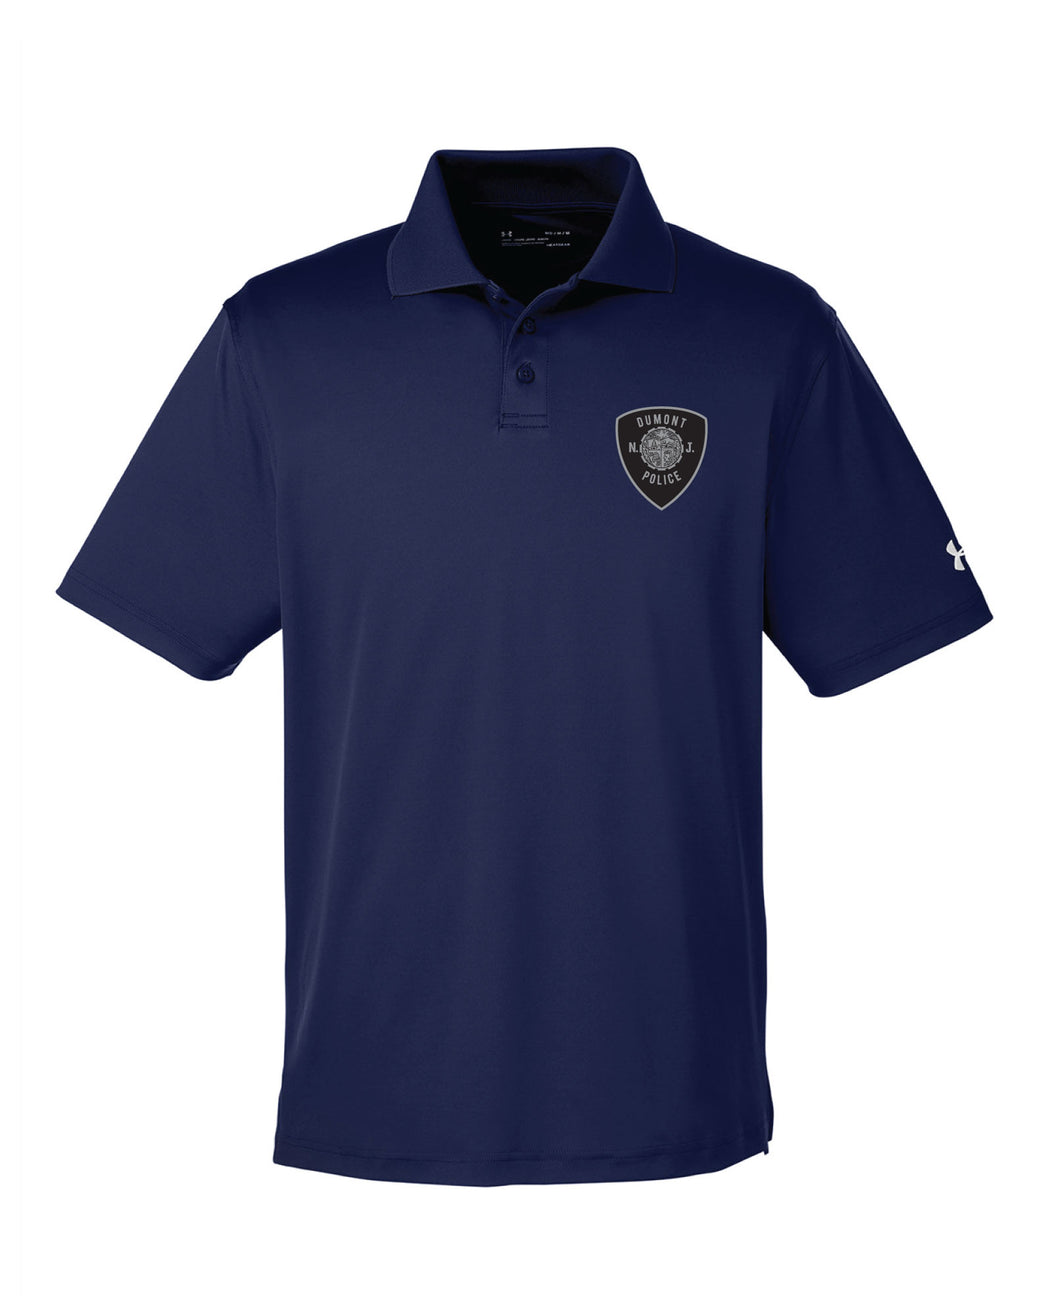 Dumont Police Under Armour Polo Shirt - Navy (Design 3) - 5KounT